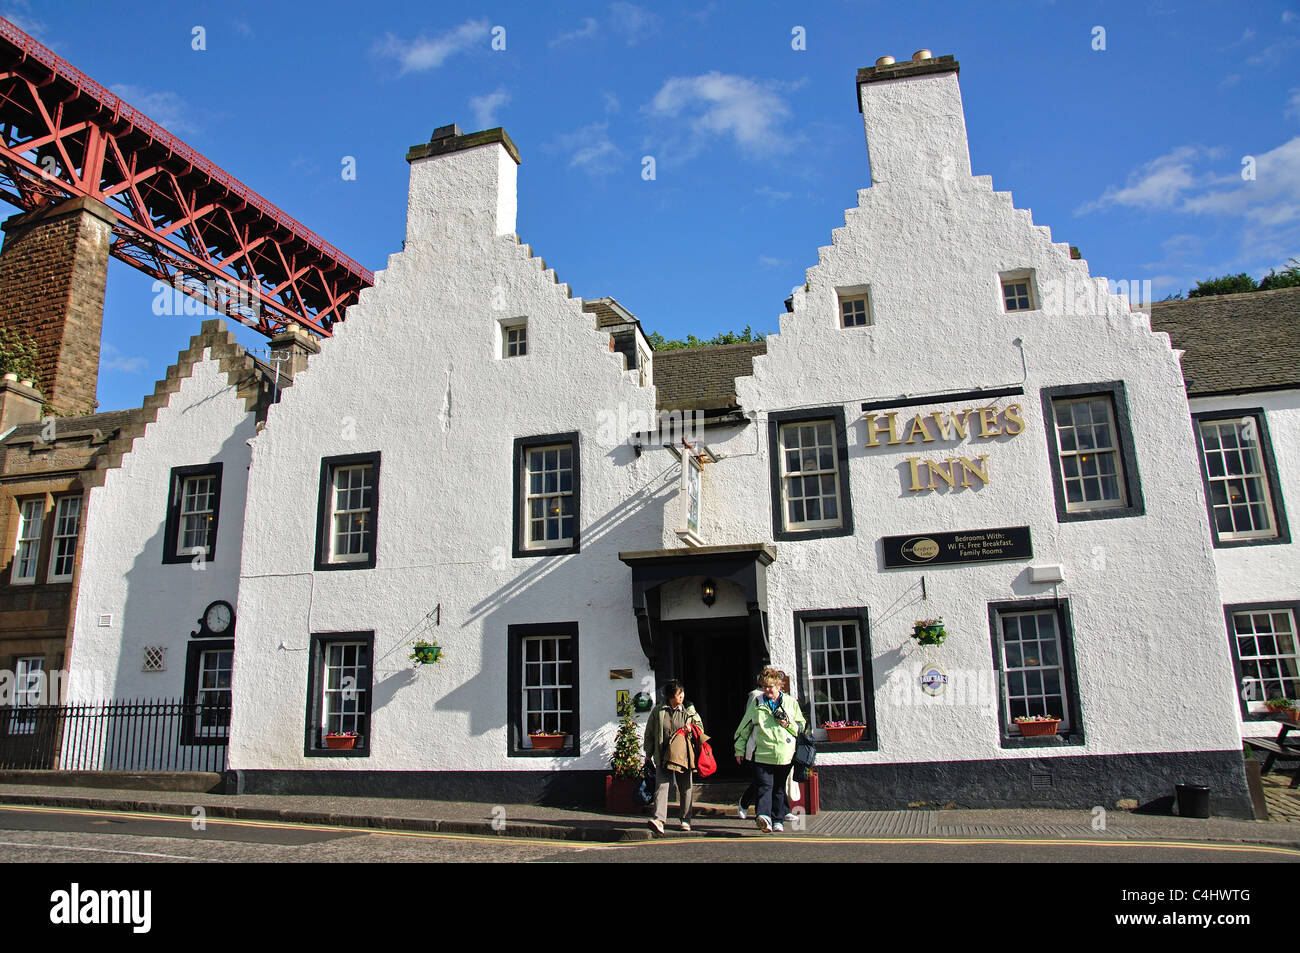 Hawes Inn, South Queensferry, Firth of Forth, Lothian, Scotland, United Kingdom Stock Photo